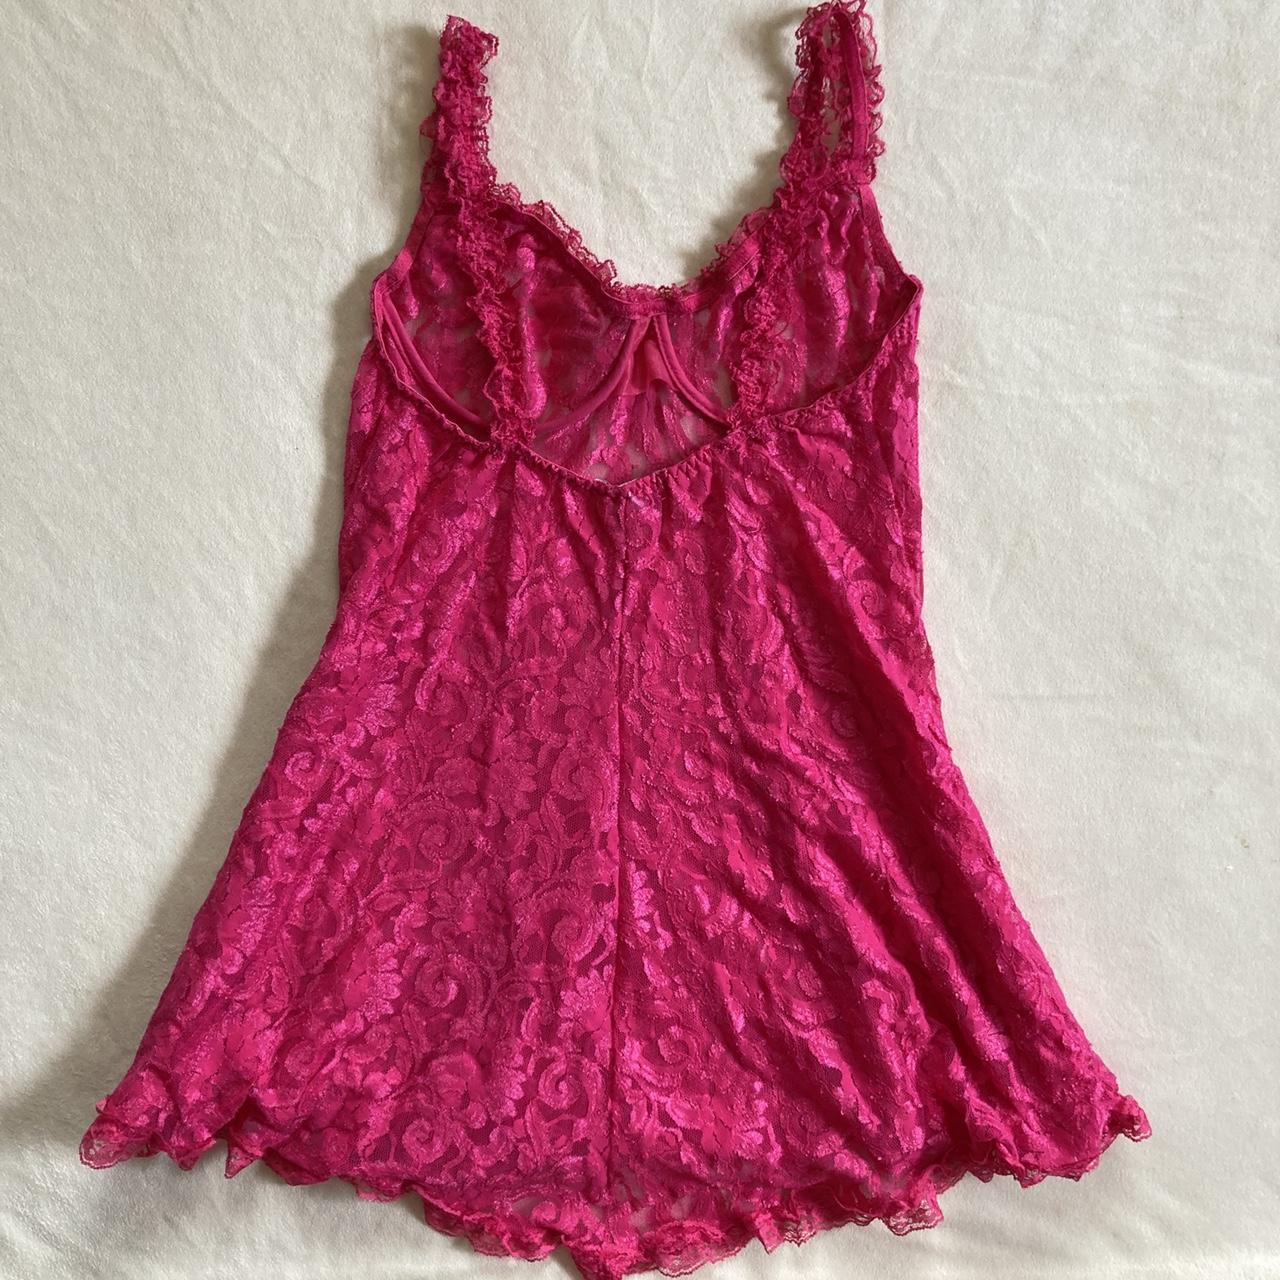 Hot Pink Ruffled Lace Slip Dress Pinterest famous... - Depop